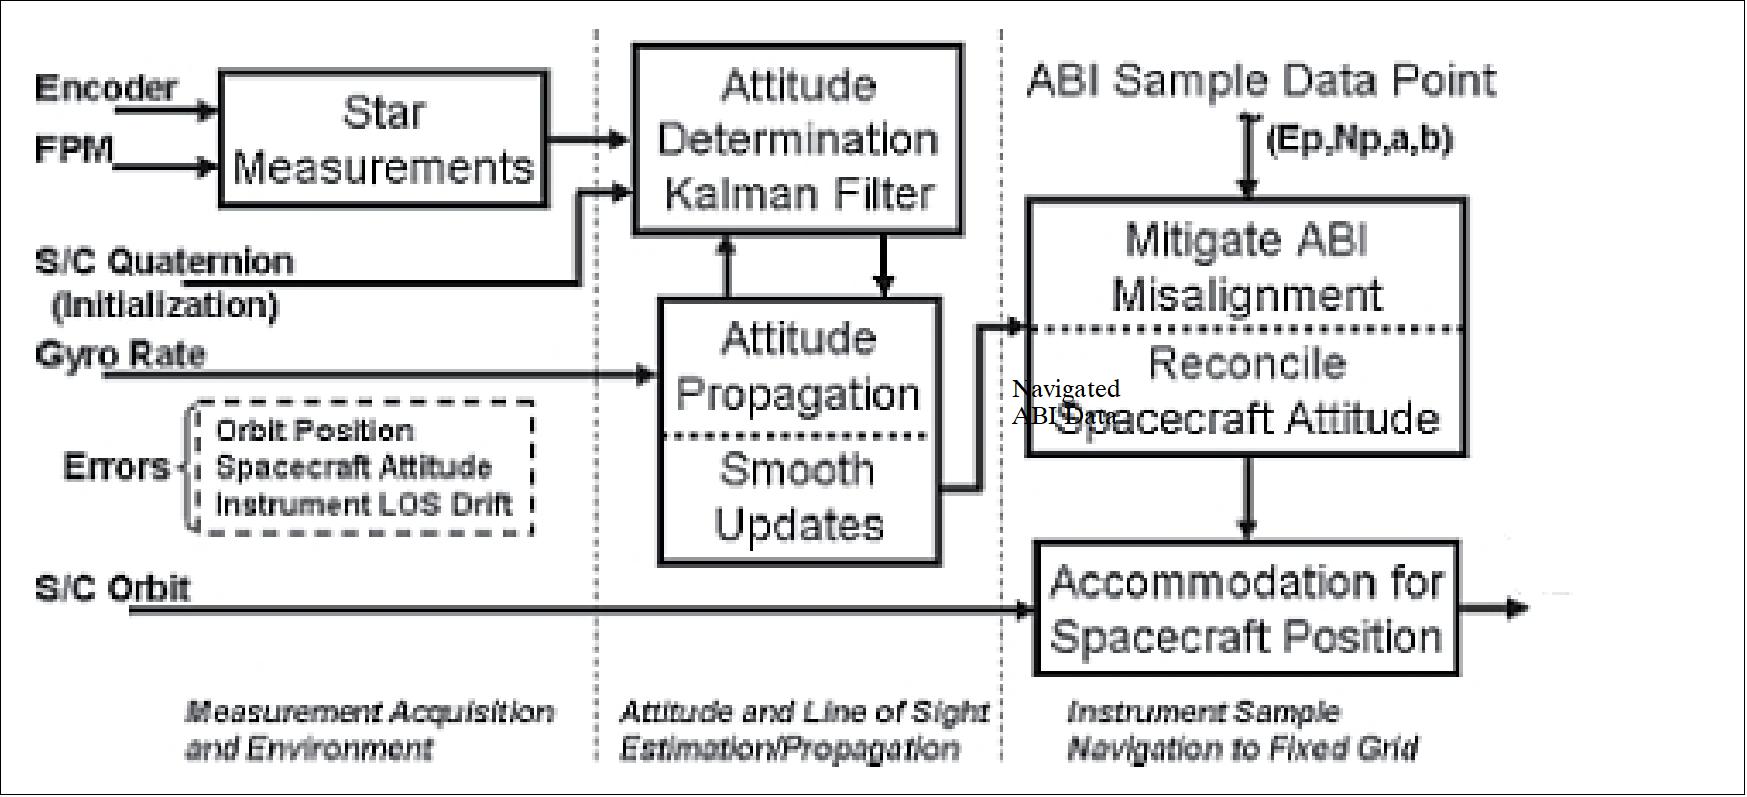 Figure 50: ABI image navigation and registration process (image credit: ITT)